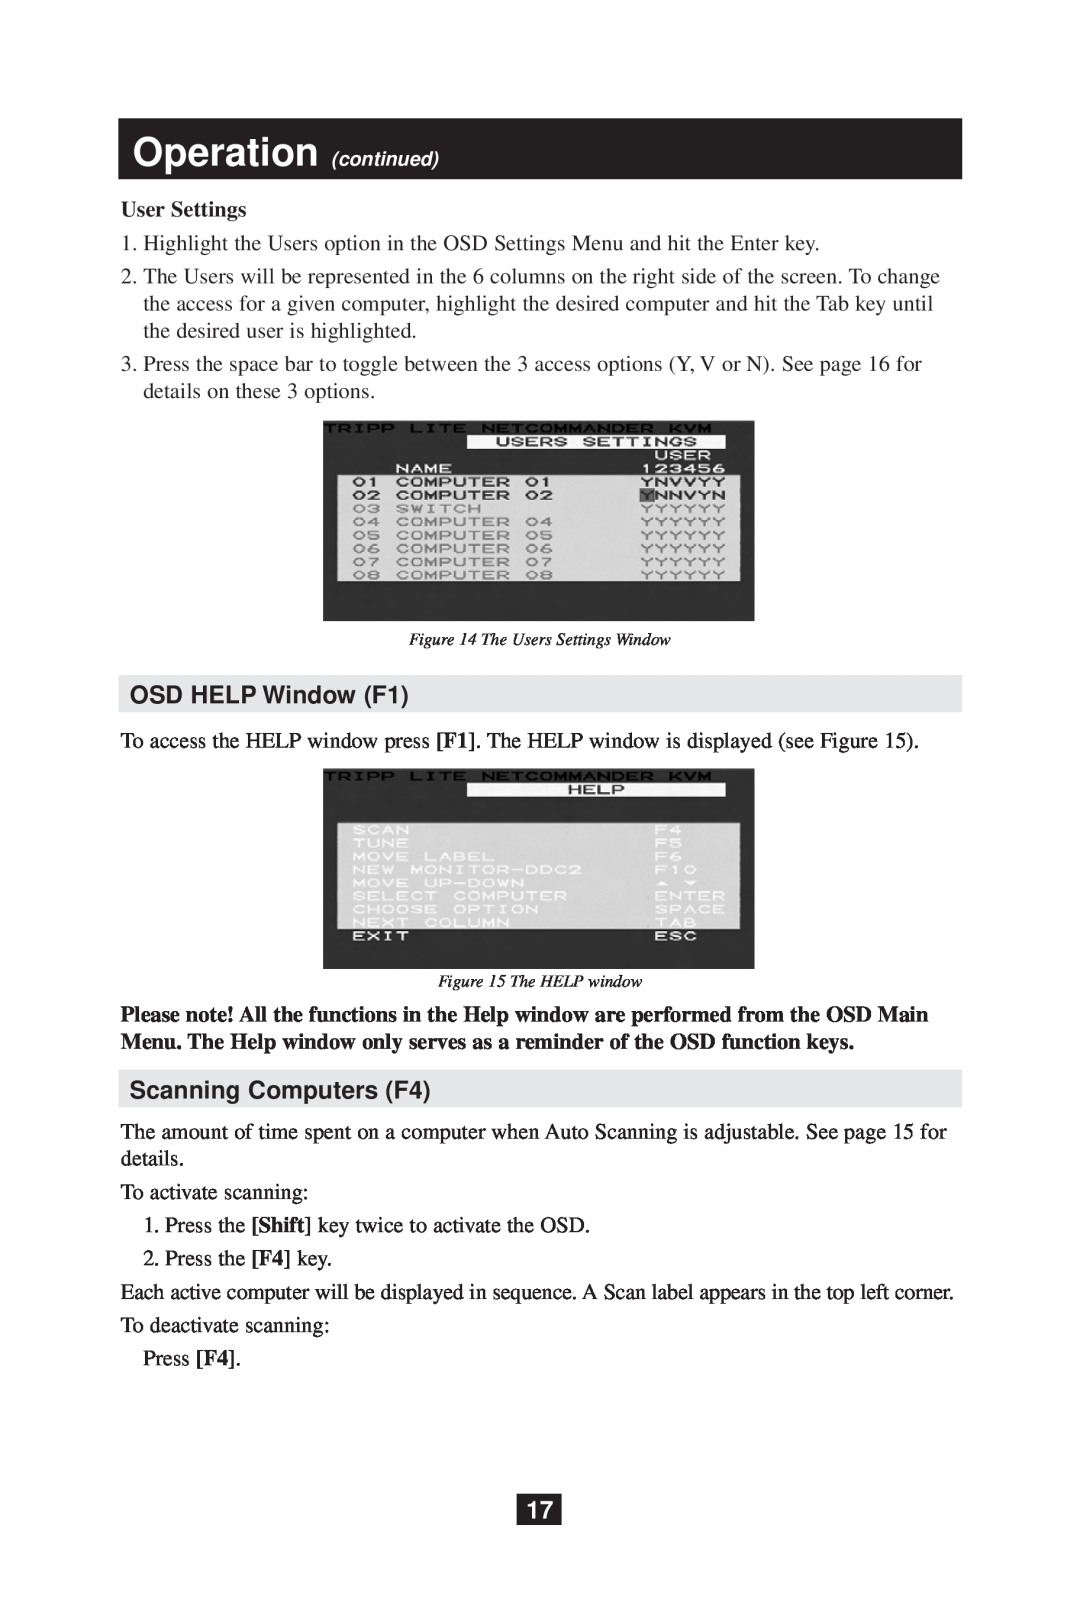 Tripp Lite B070-008-19 owner manual OSD HELP Window F1, Scanning Computers F4, User Settings 